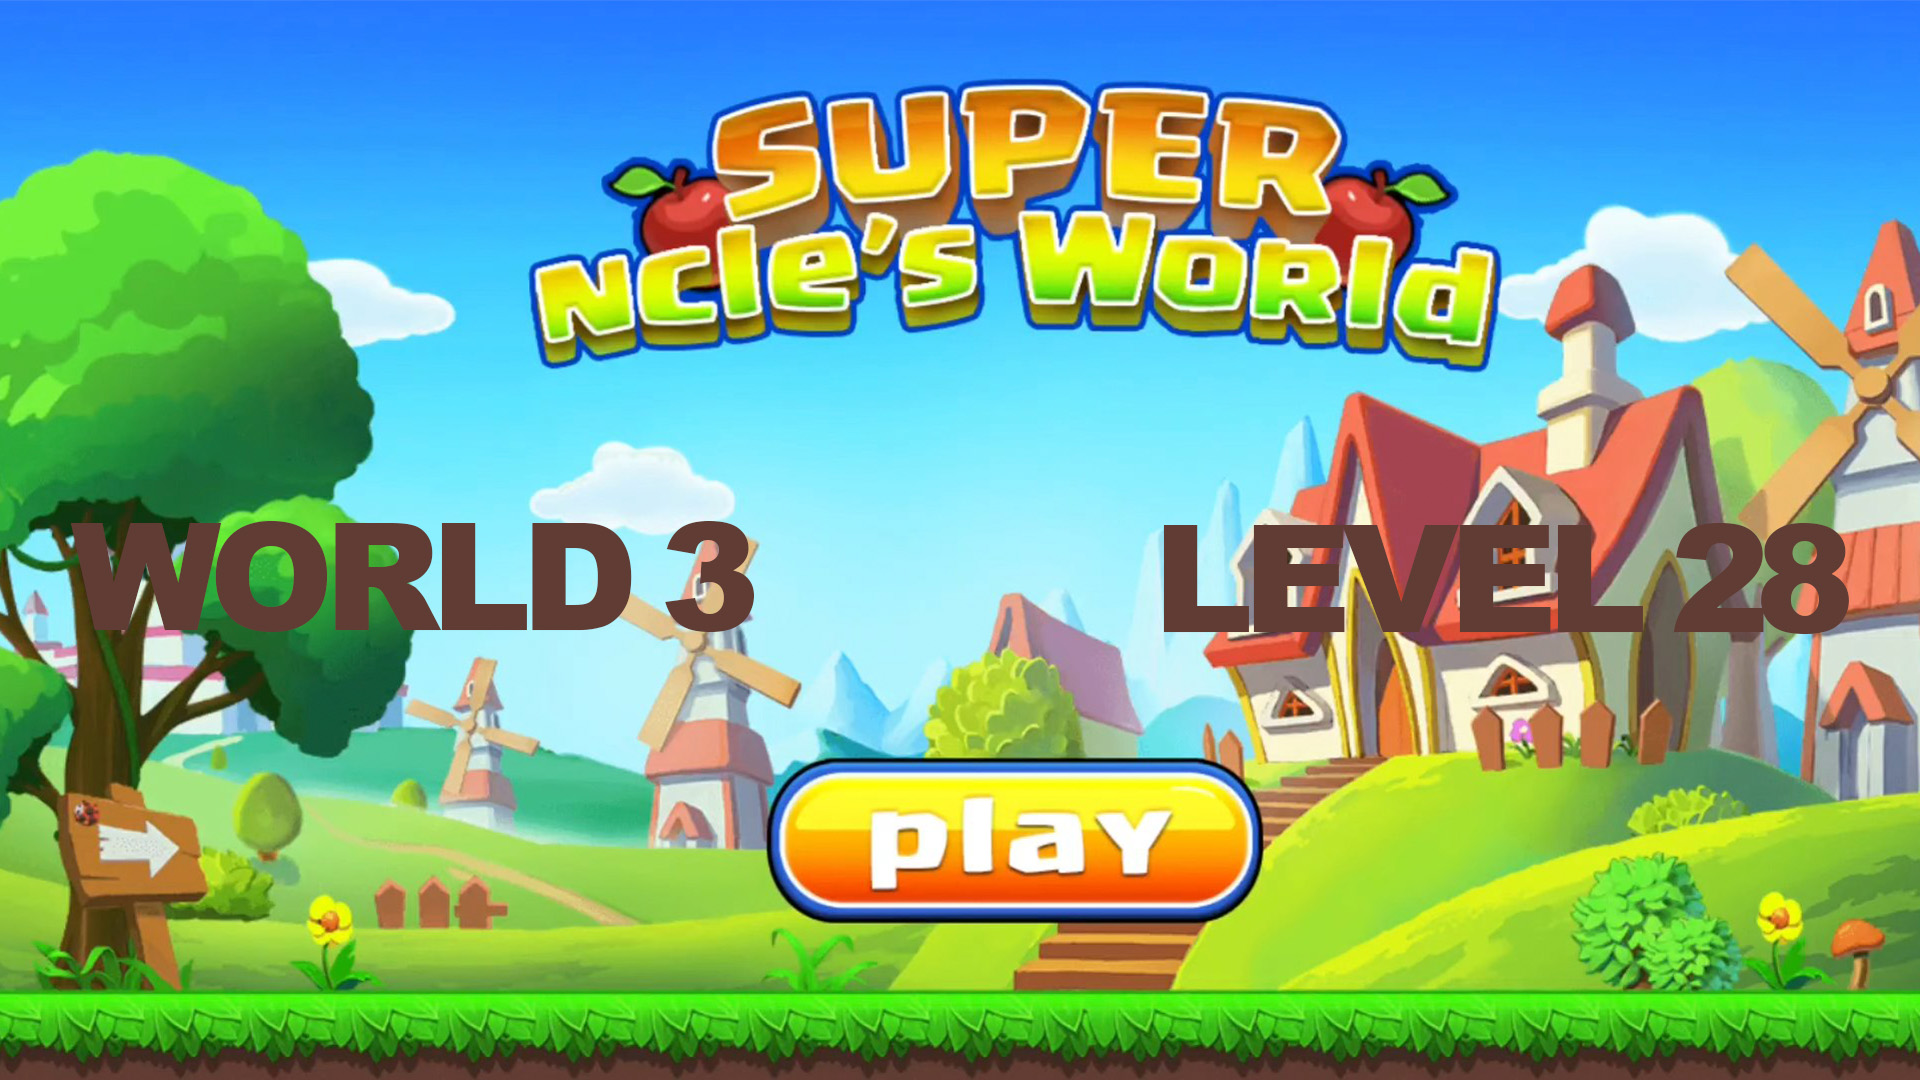 Super ncle's  World 3. Level 28.